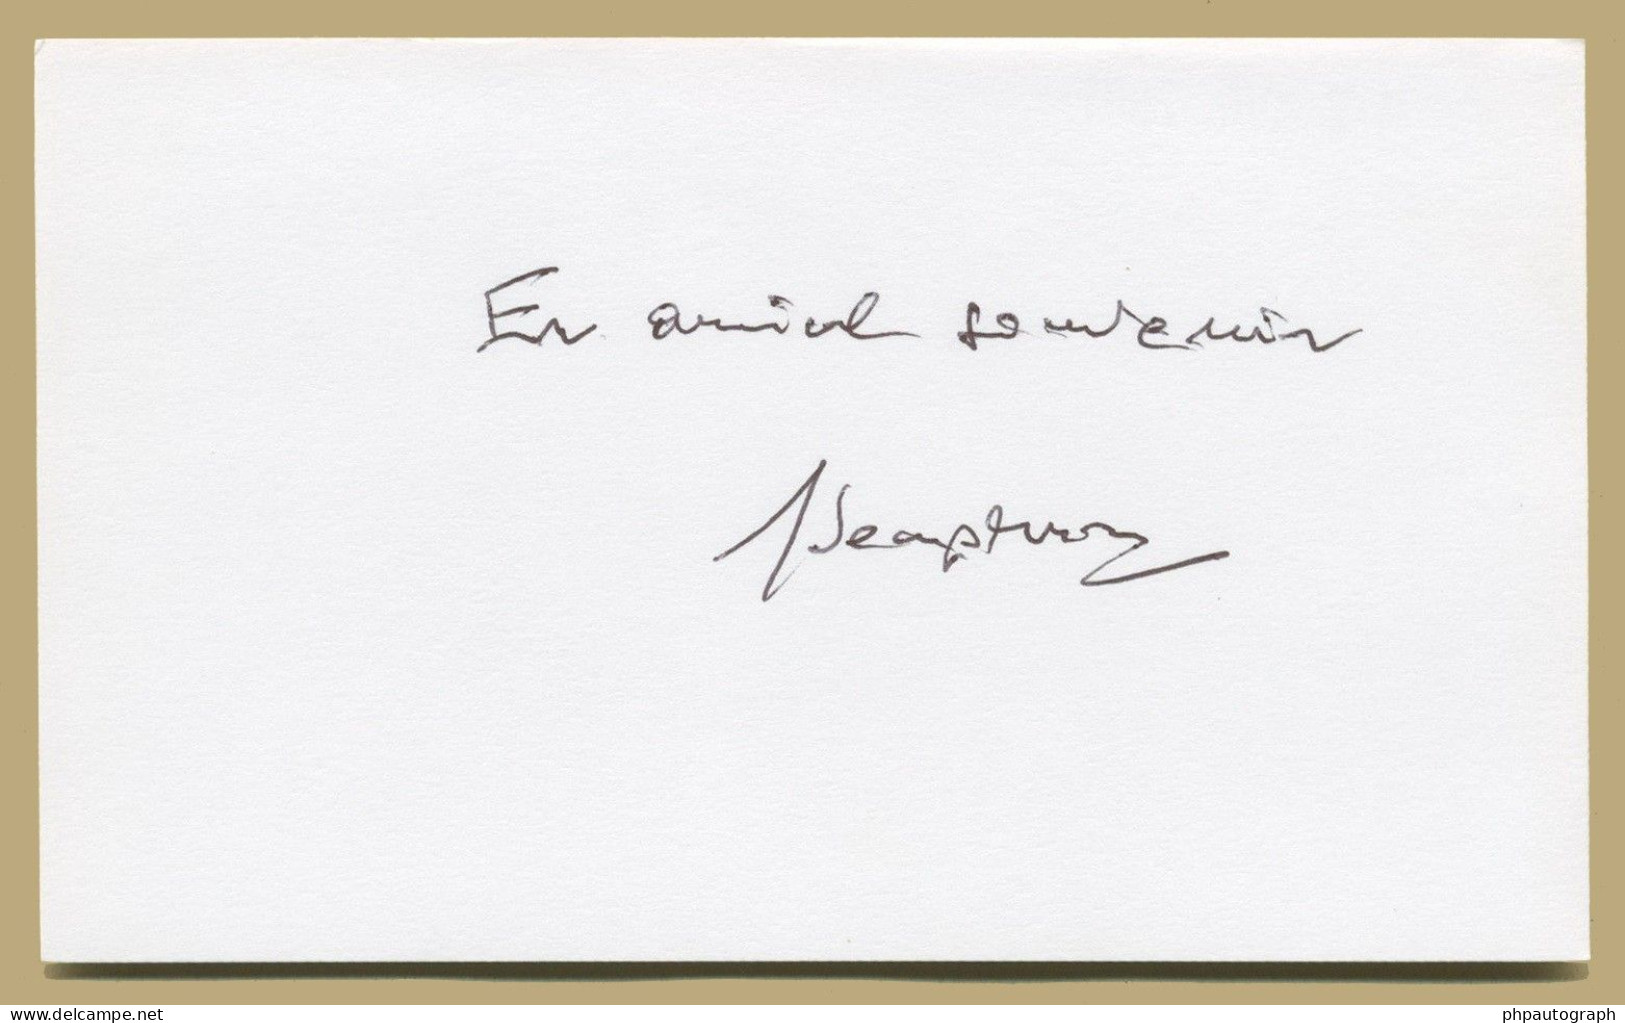 Jorge Semprún (1923-2011) - Écrivain Espagnol - Carte Signée + Photo - 90s - Schriftsteller